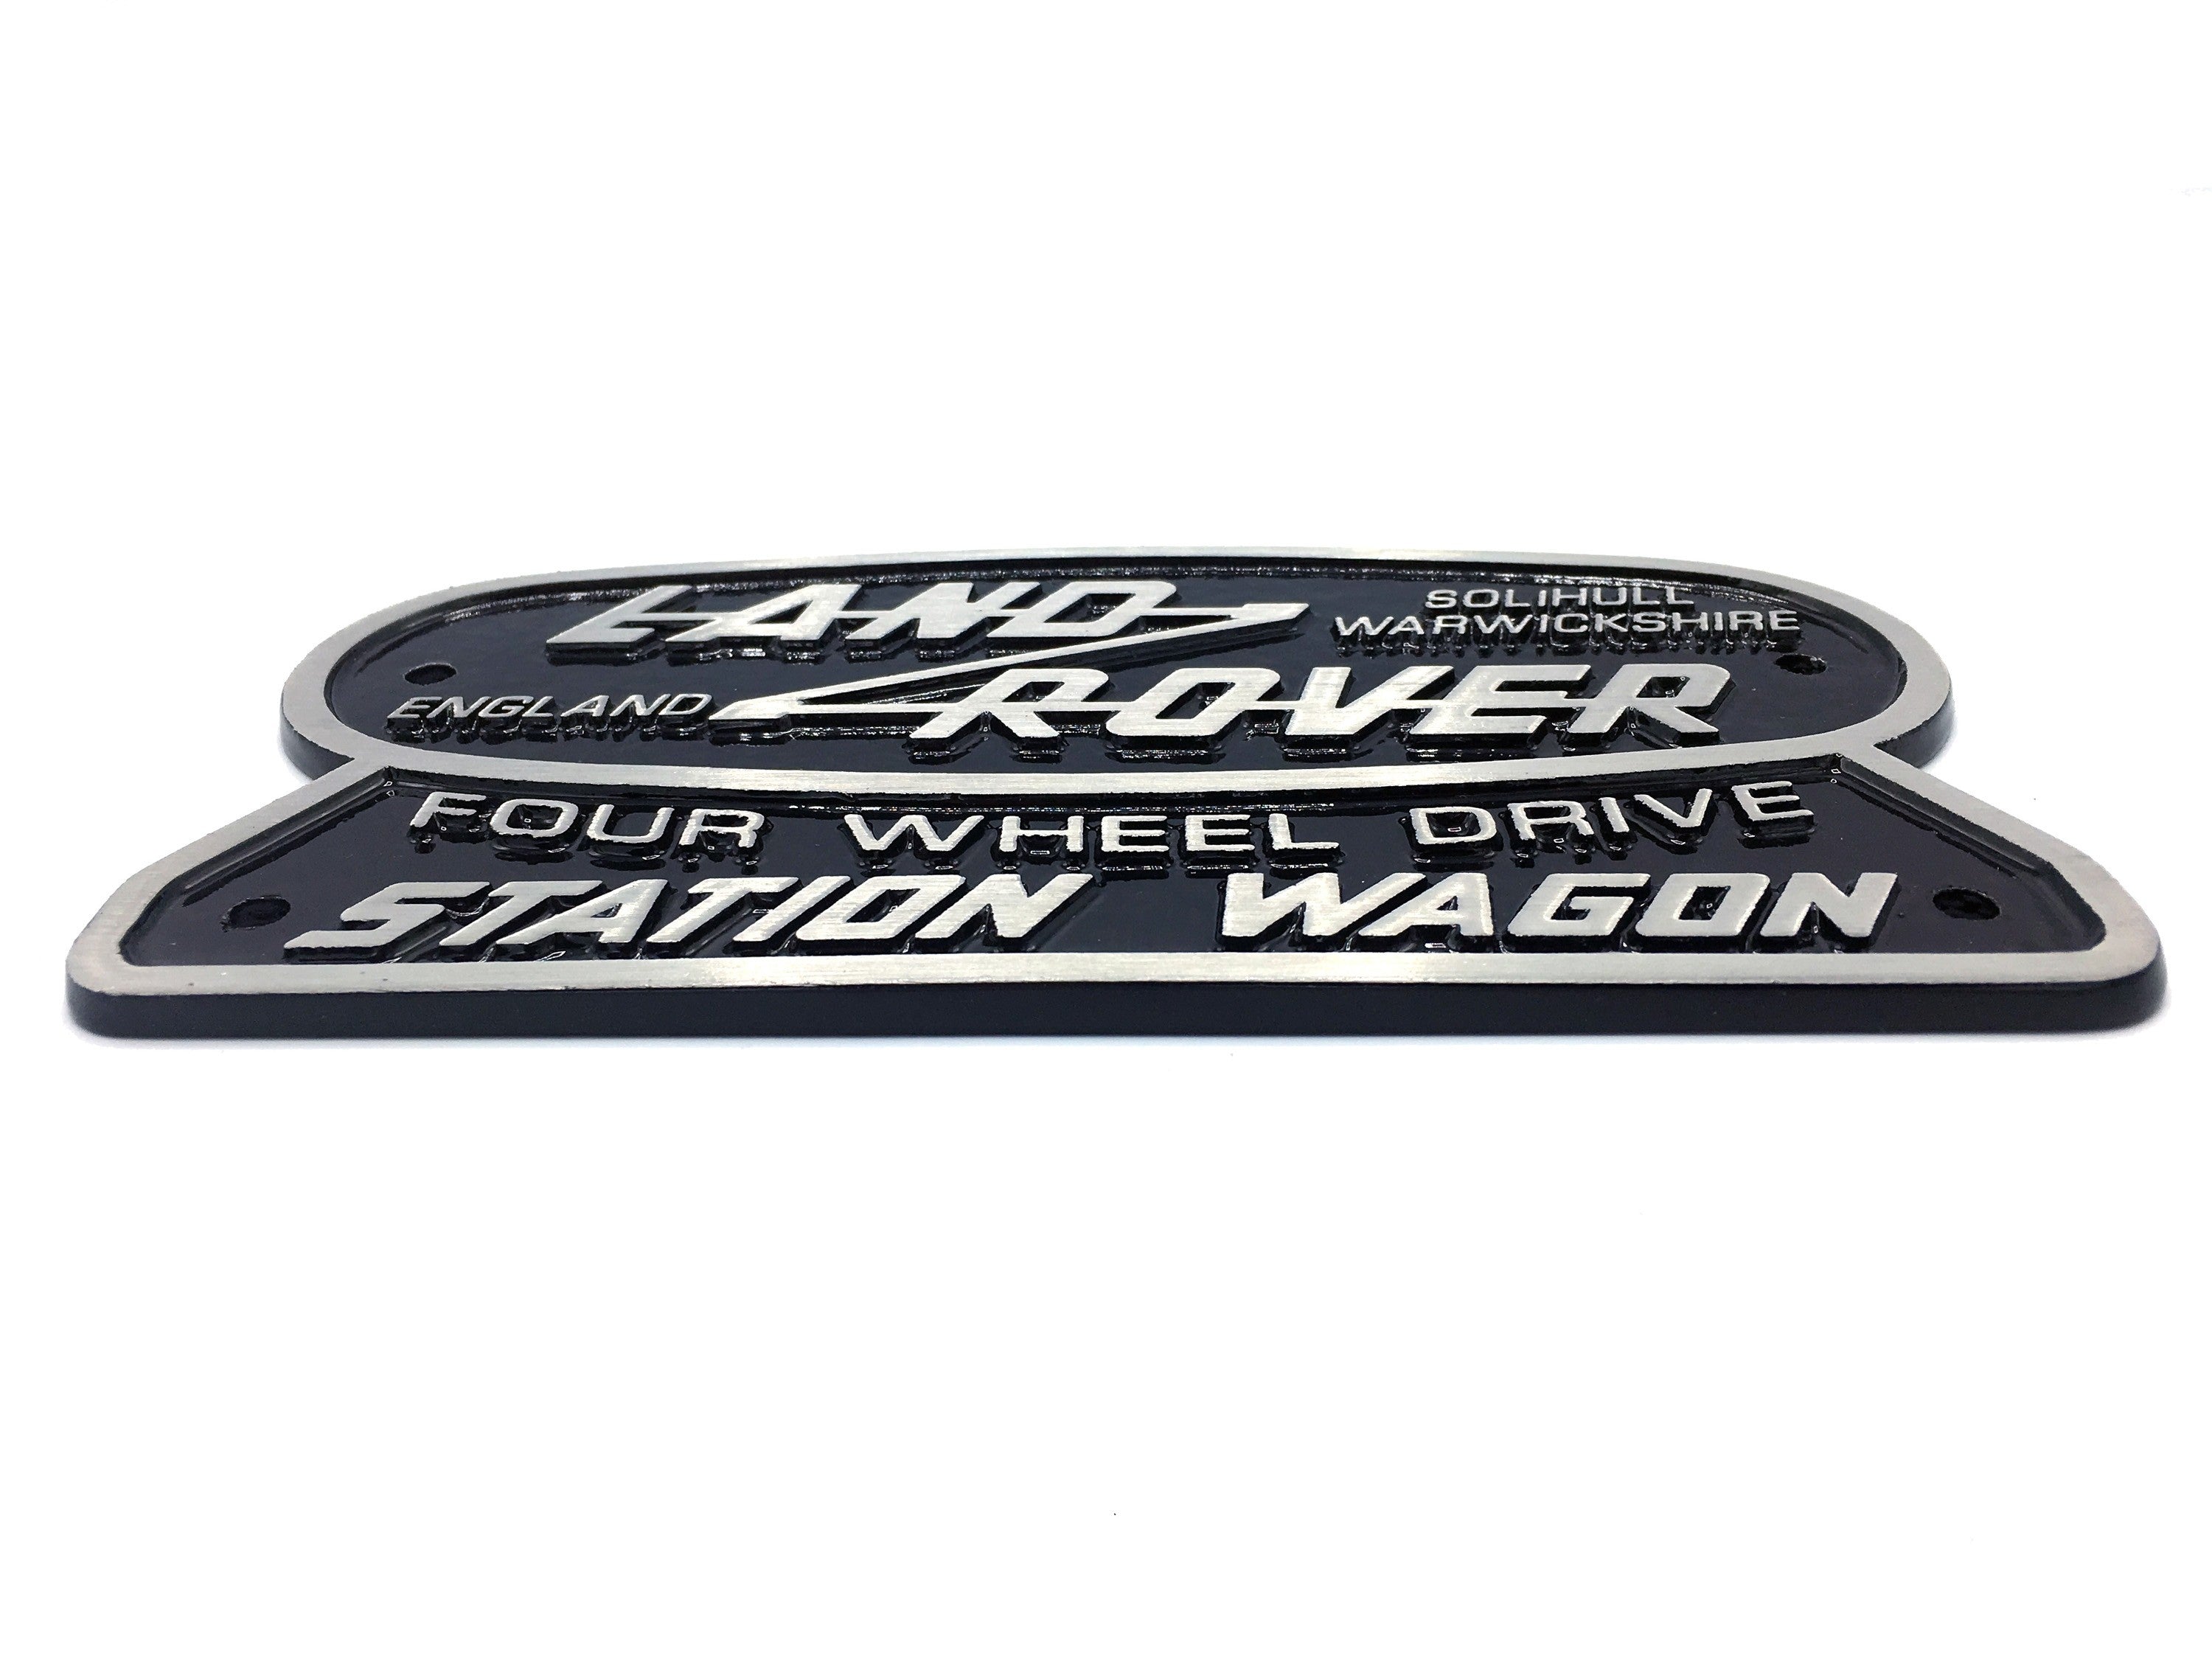 "Land Rover Four Wheel Drive Station Wagon" Oval Badge (Cast Aluminum)